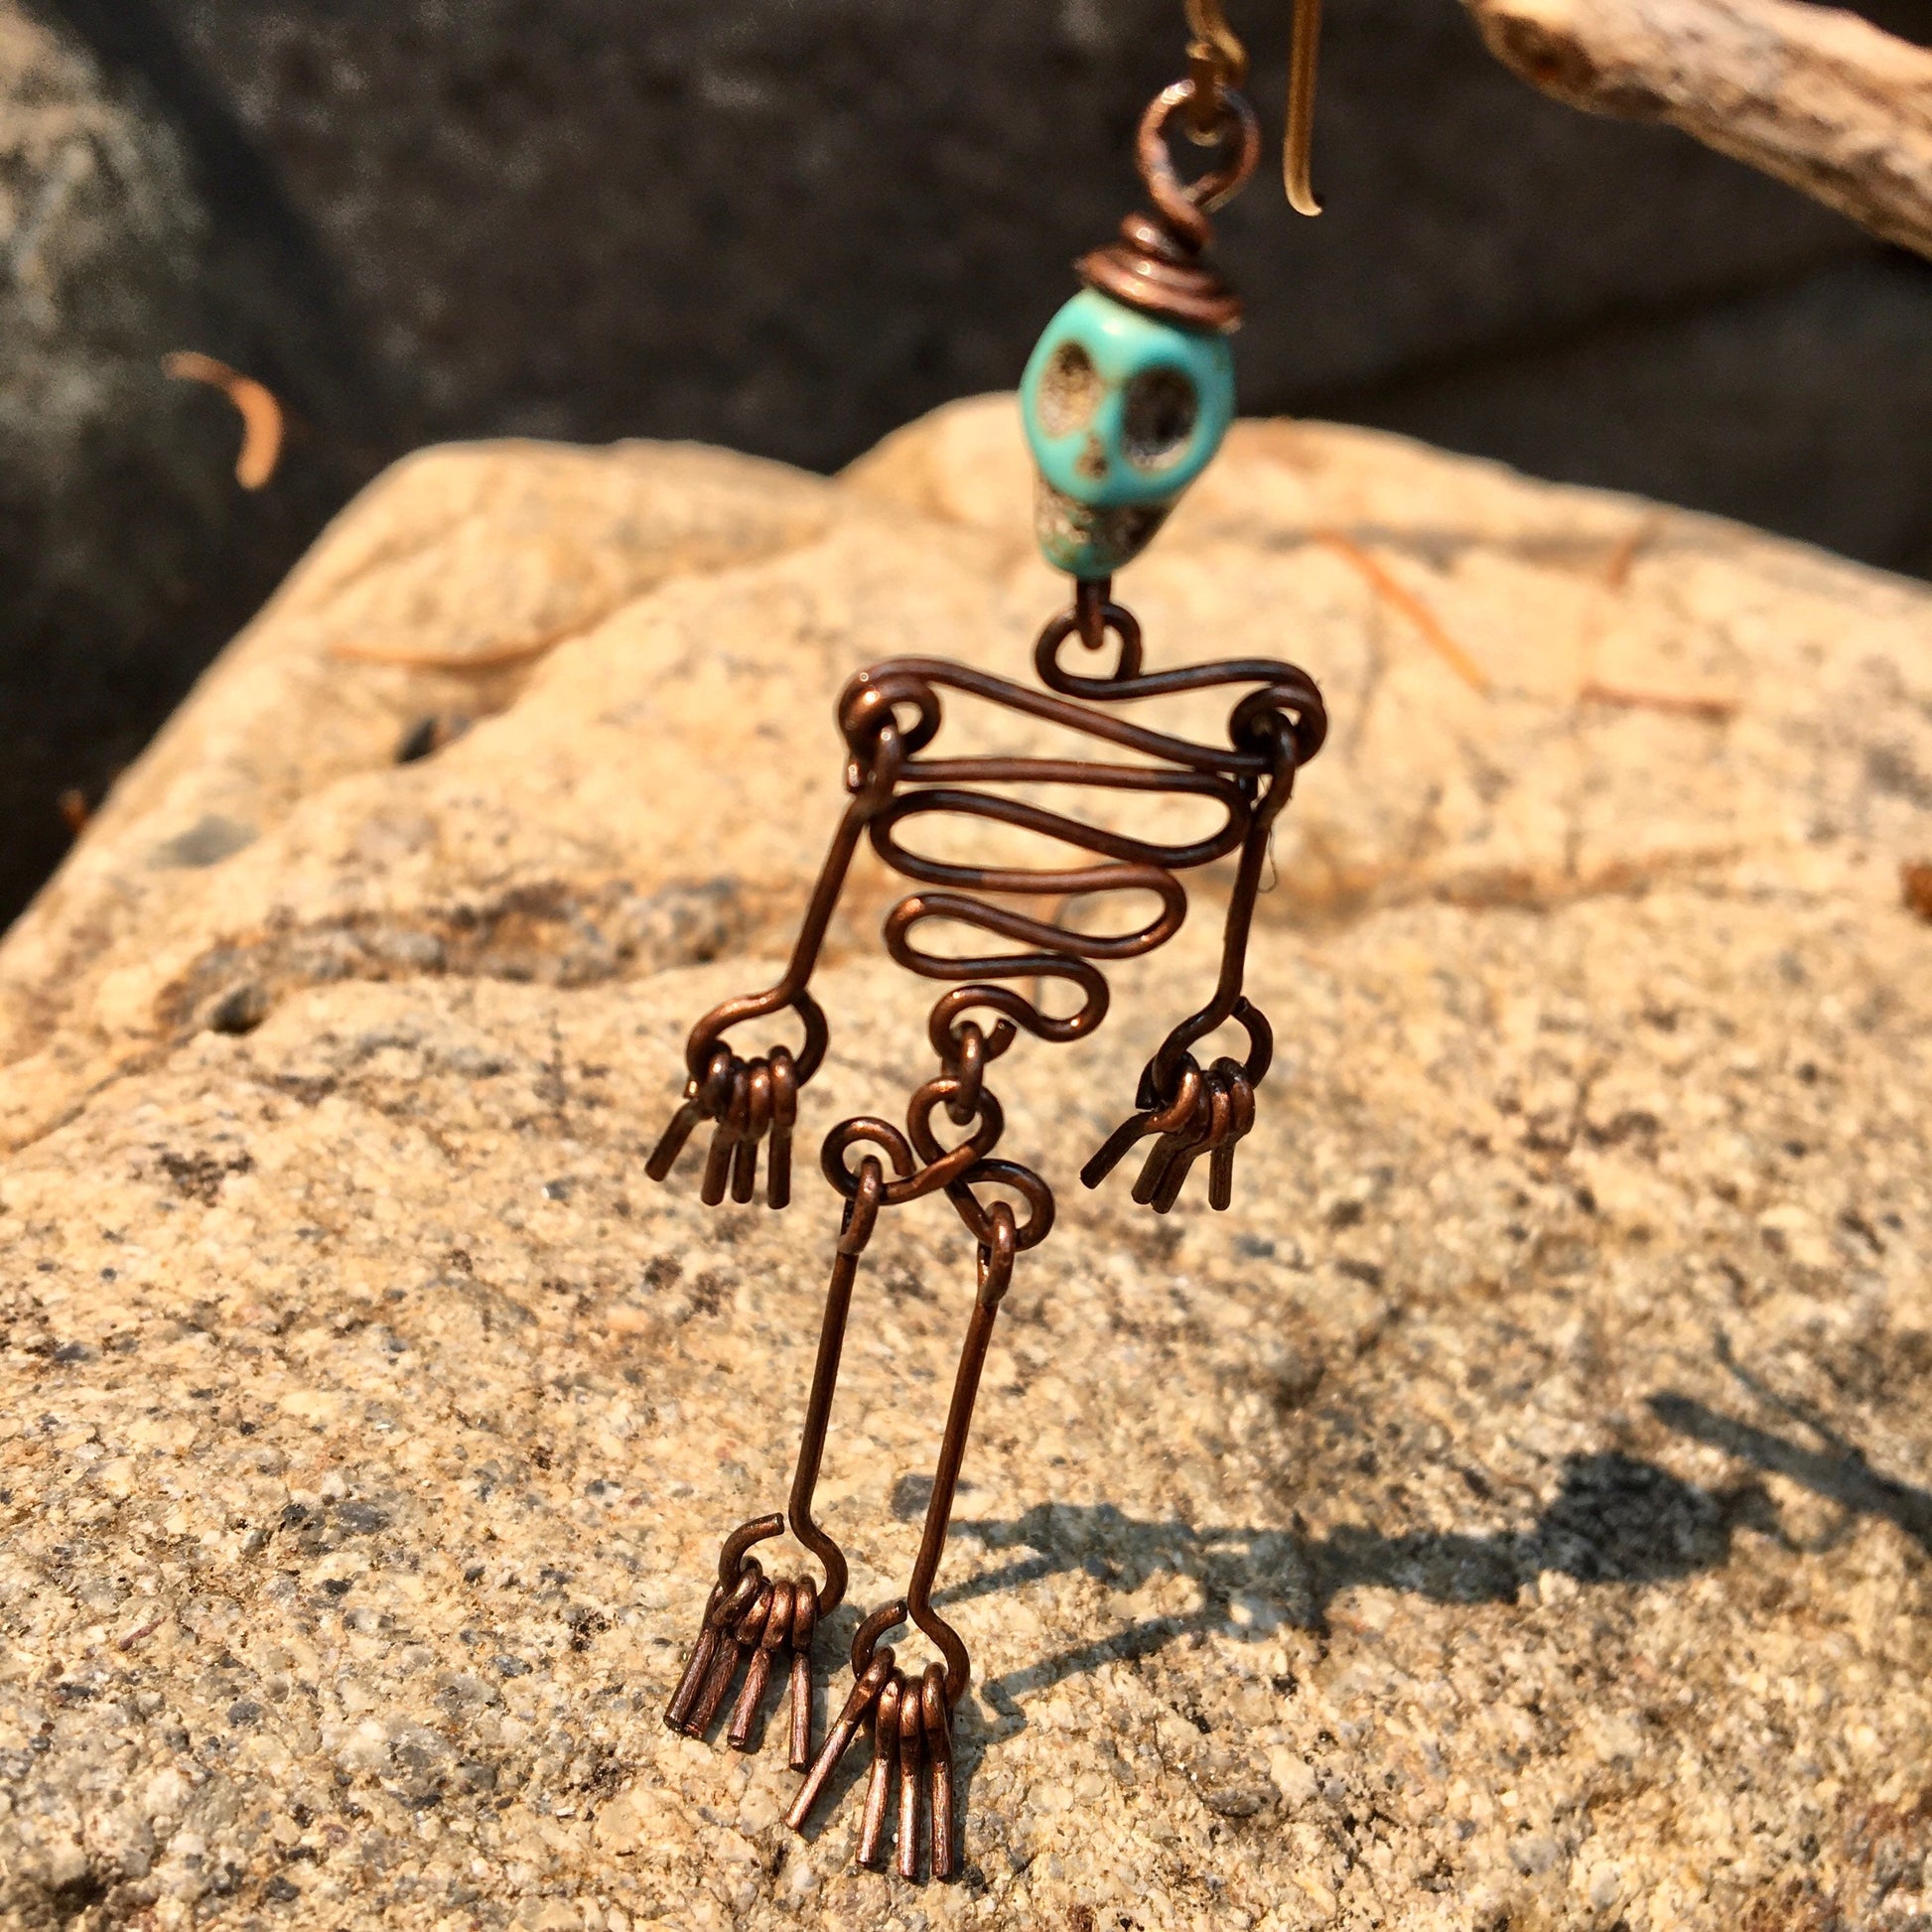 Dancing Skeleton Articulated Earrings Sterling Silver & Copper w Skull Beads